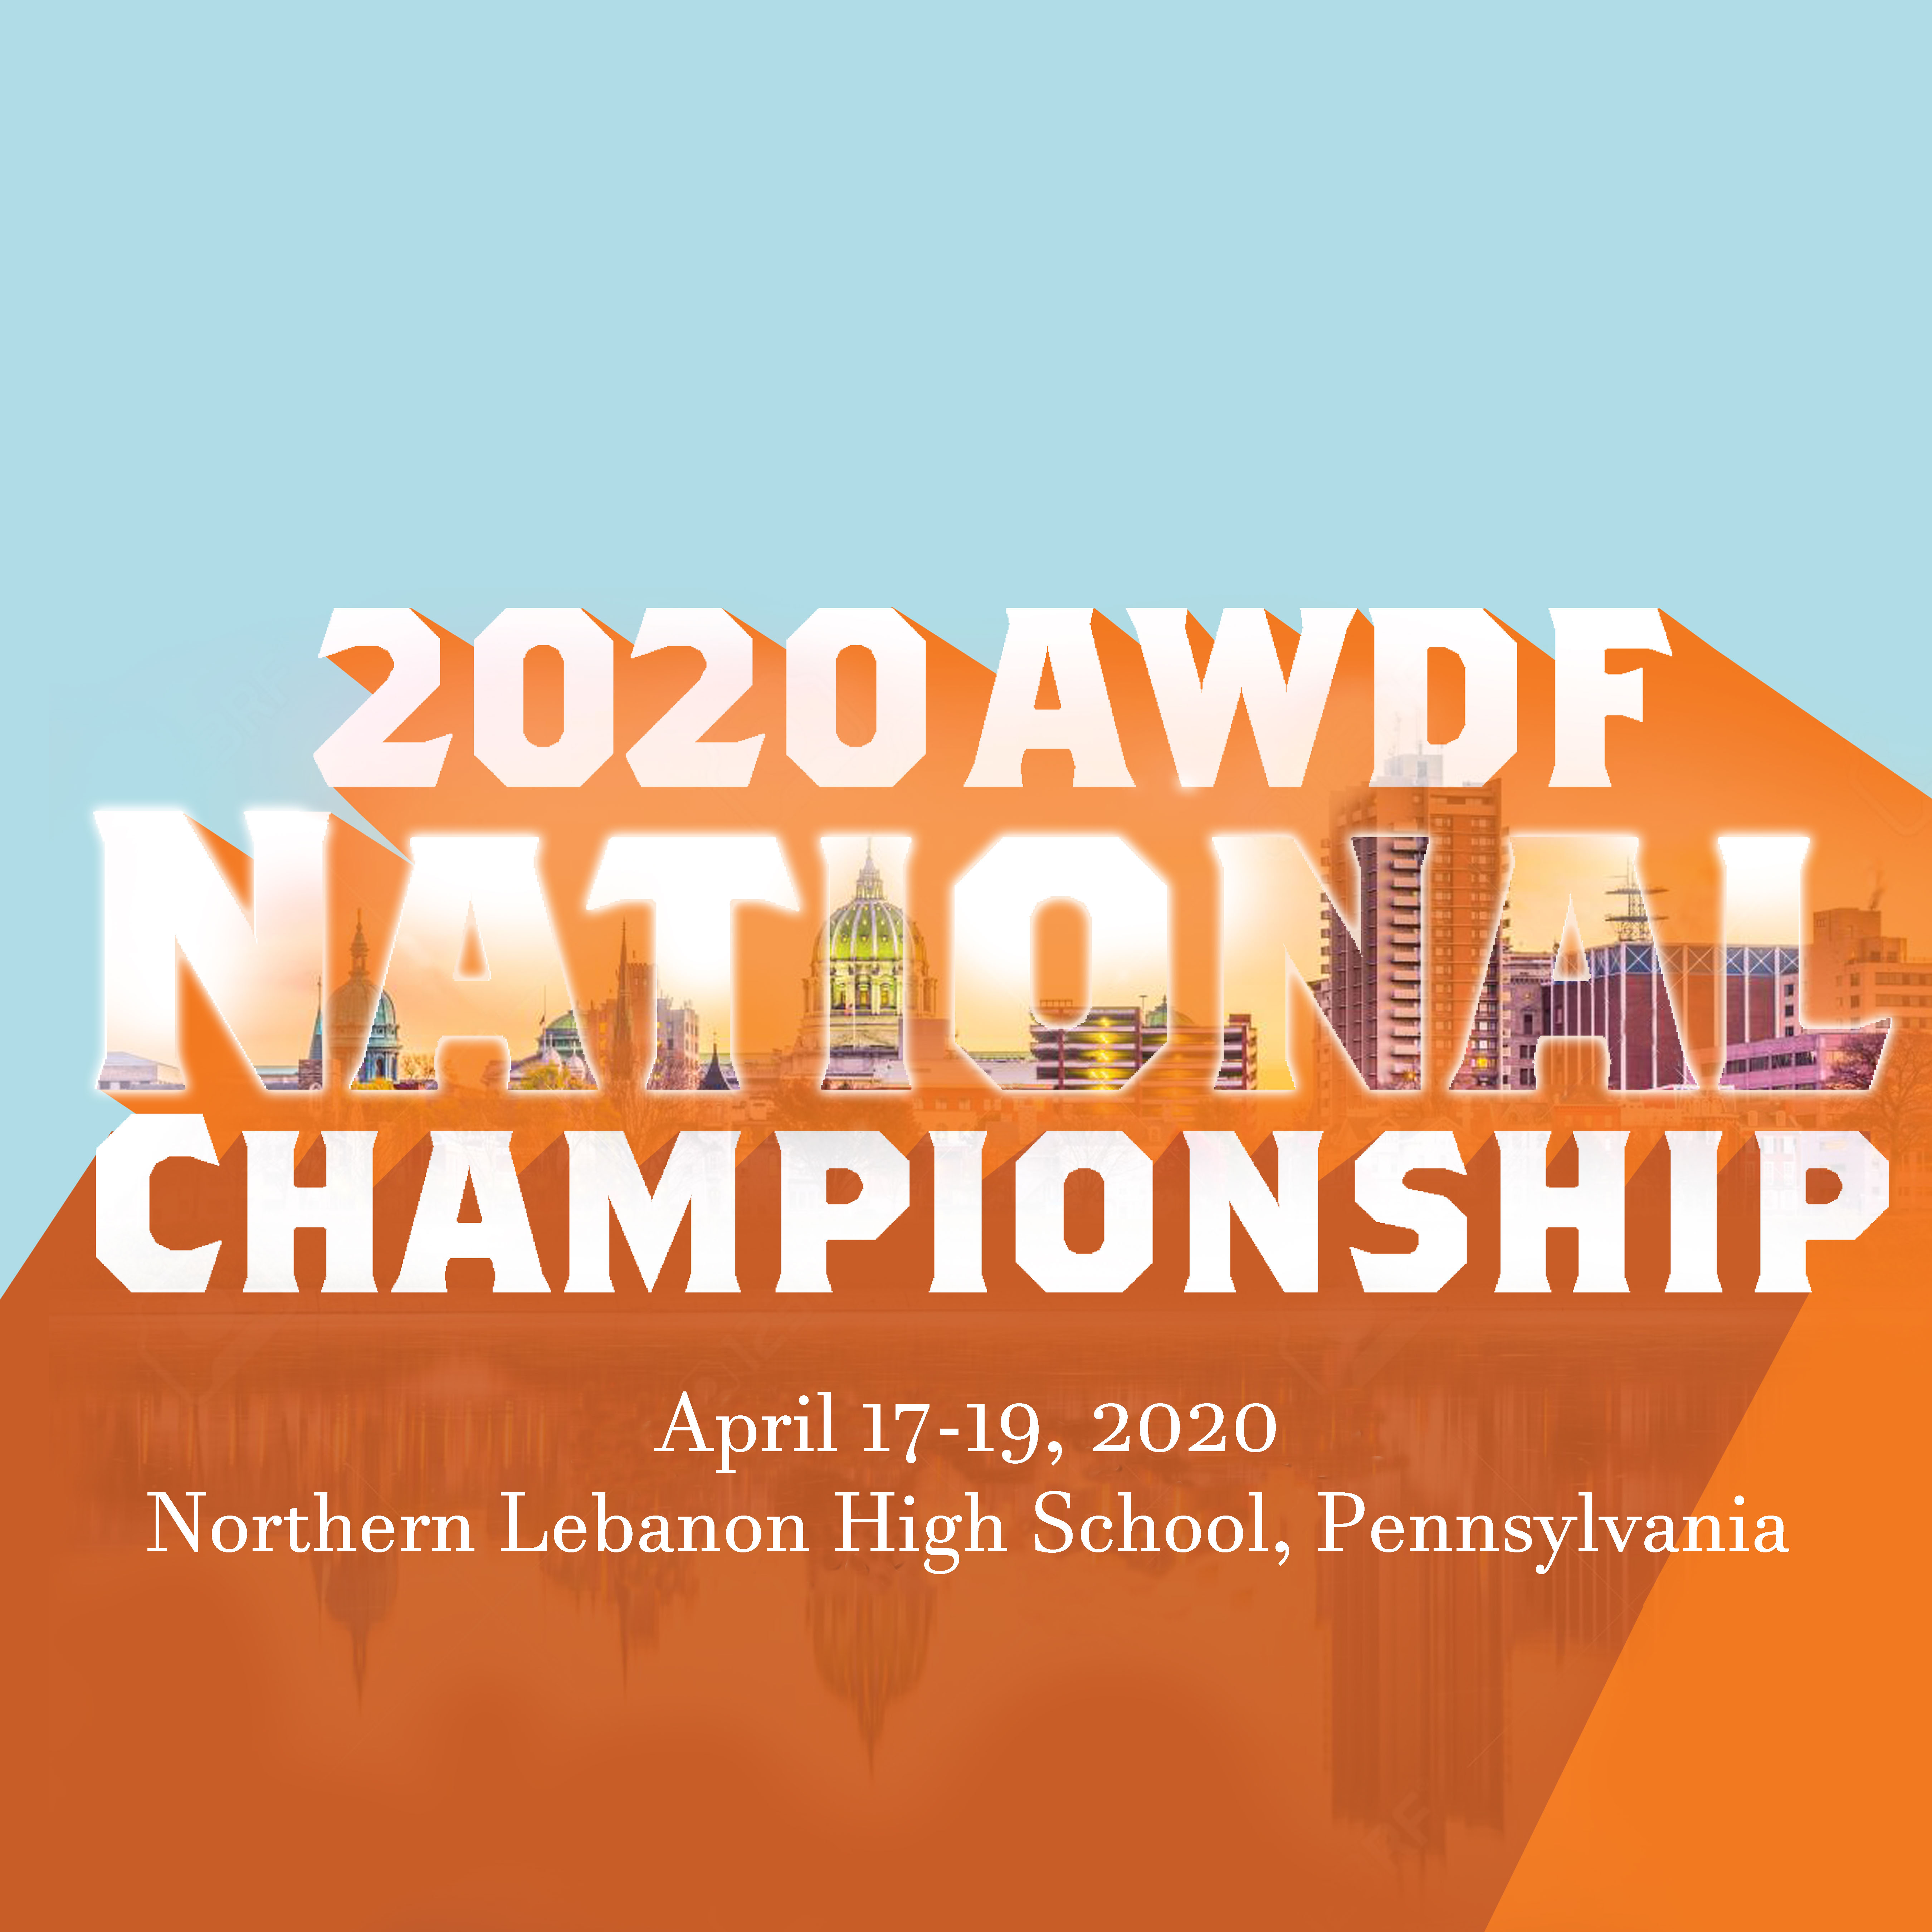 AWDF 2020 Championship Logo